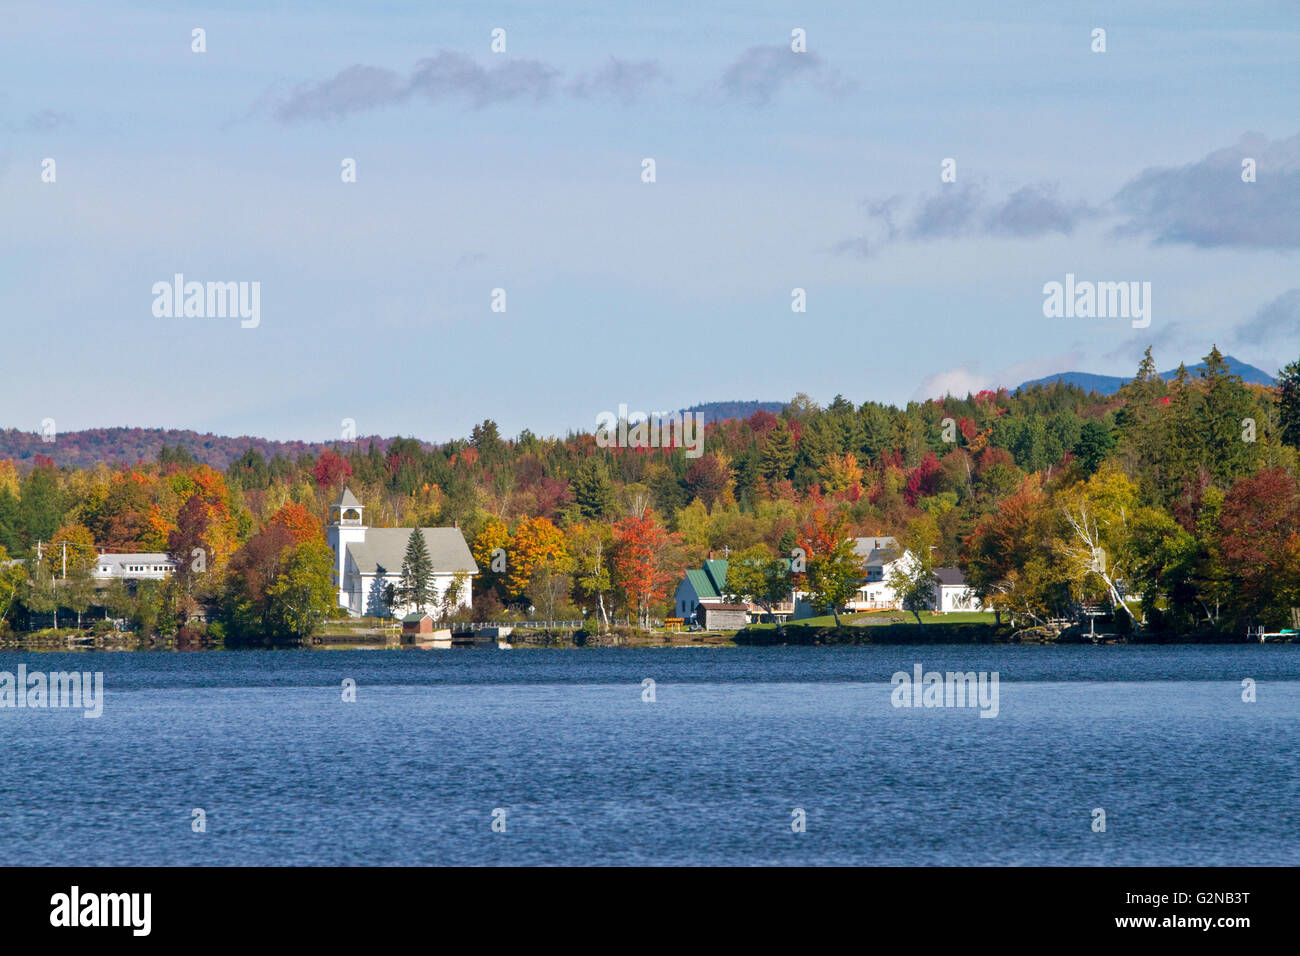 Herbstfarben am See Elmore Lamoille County, Vermont, USA. Stockfoto